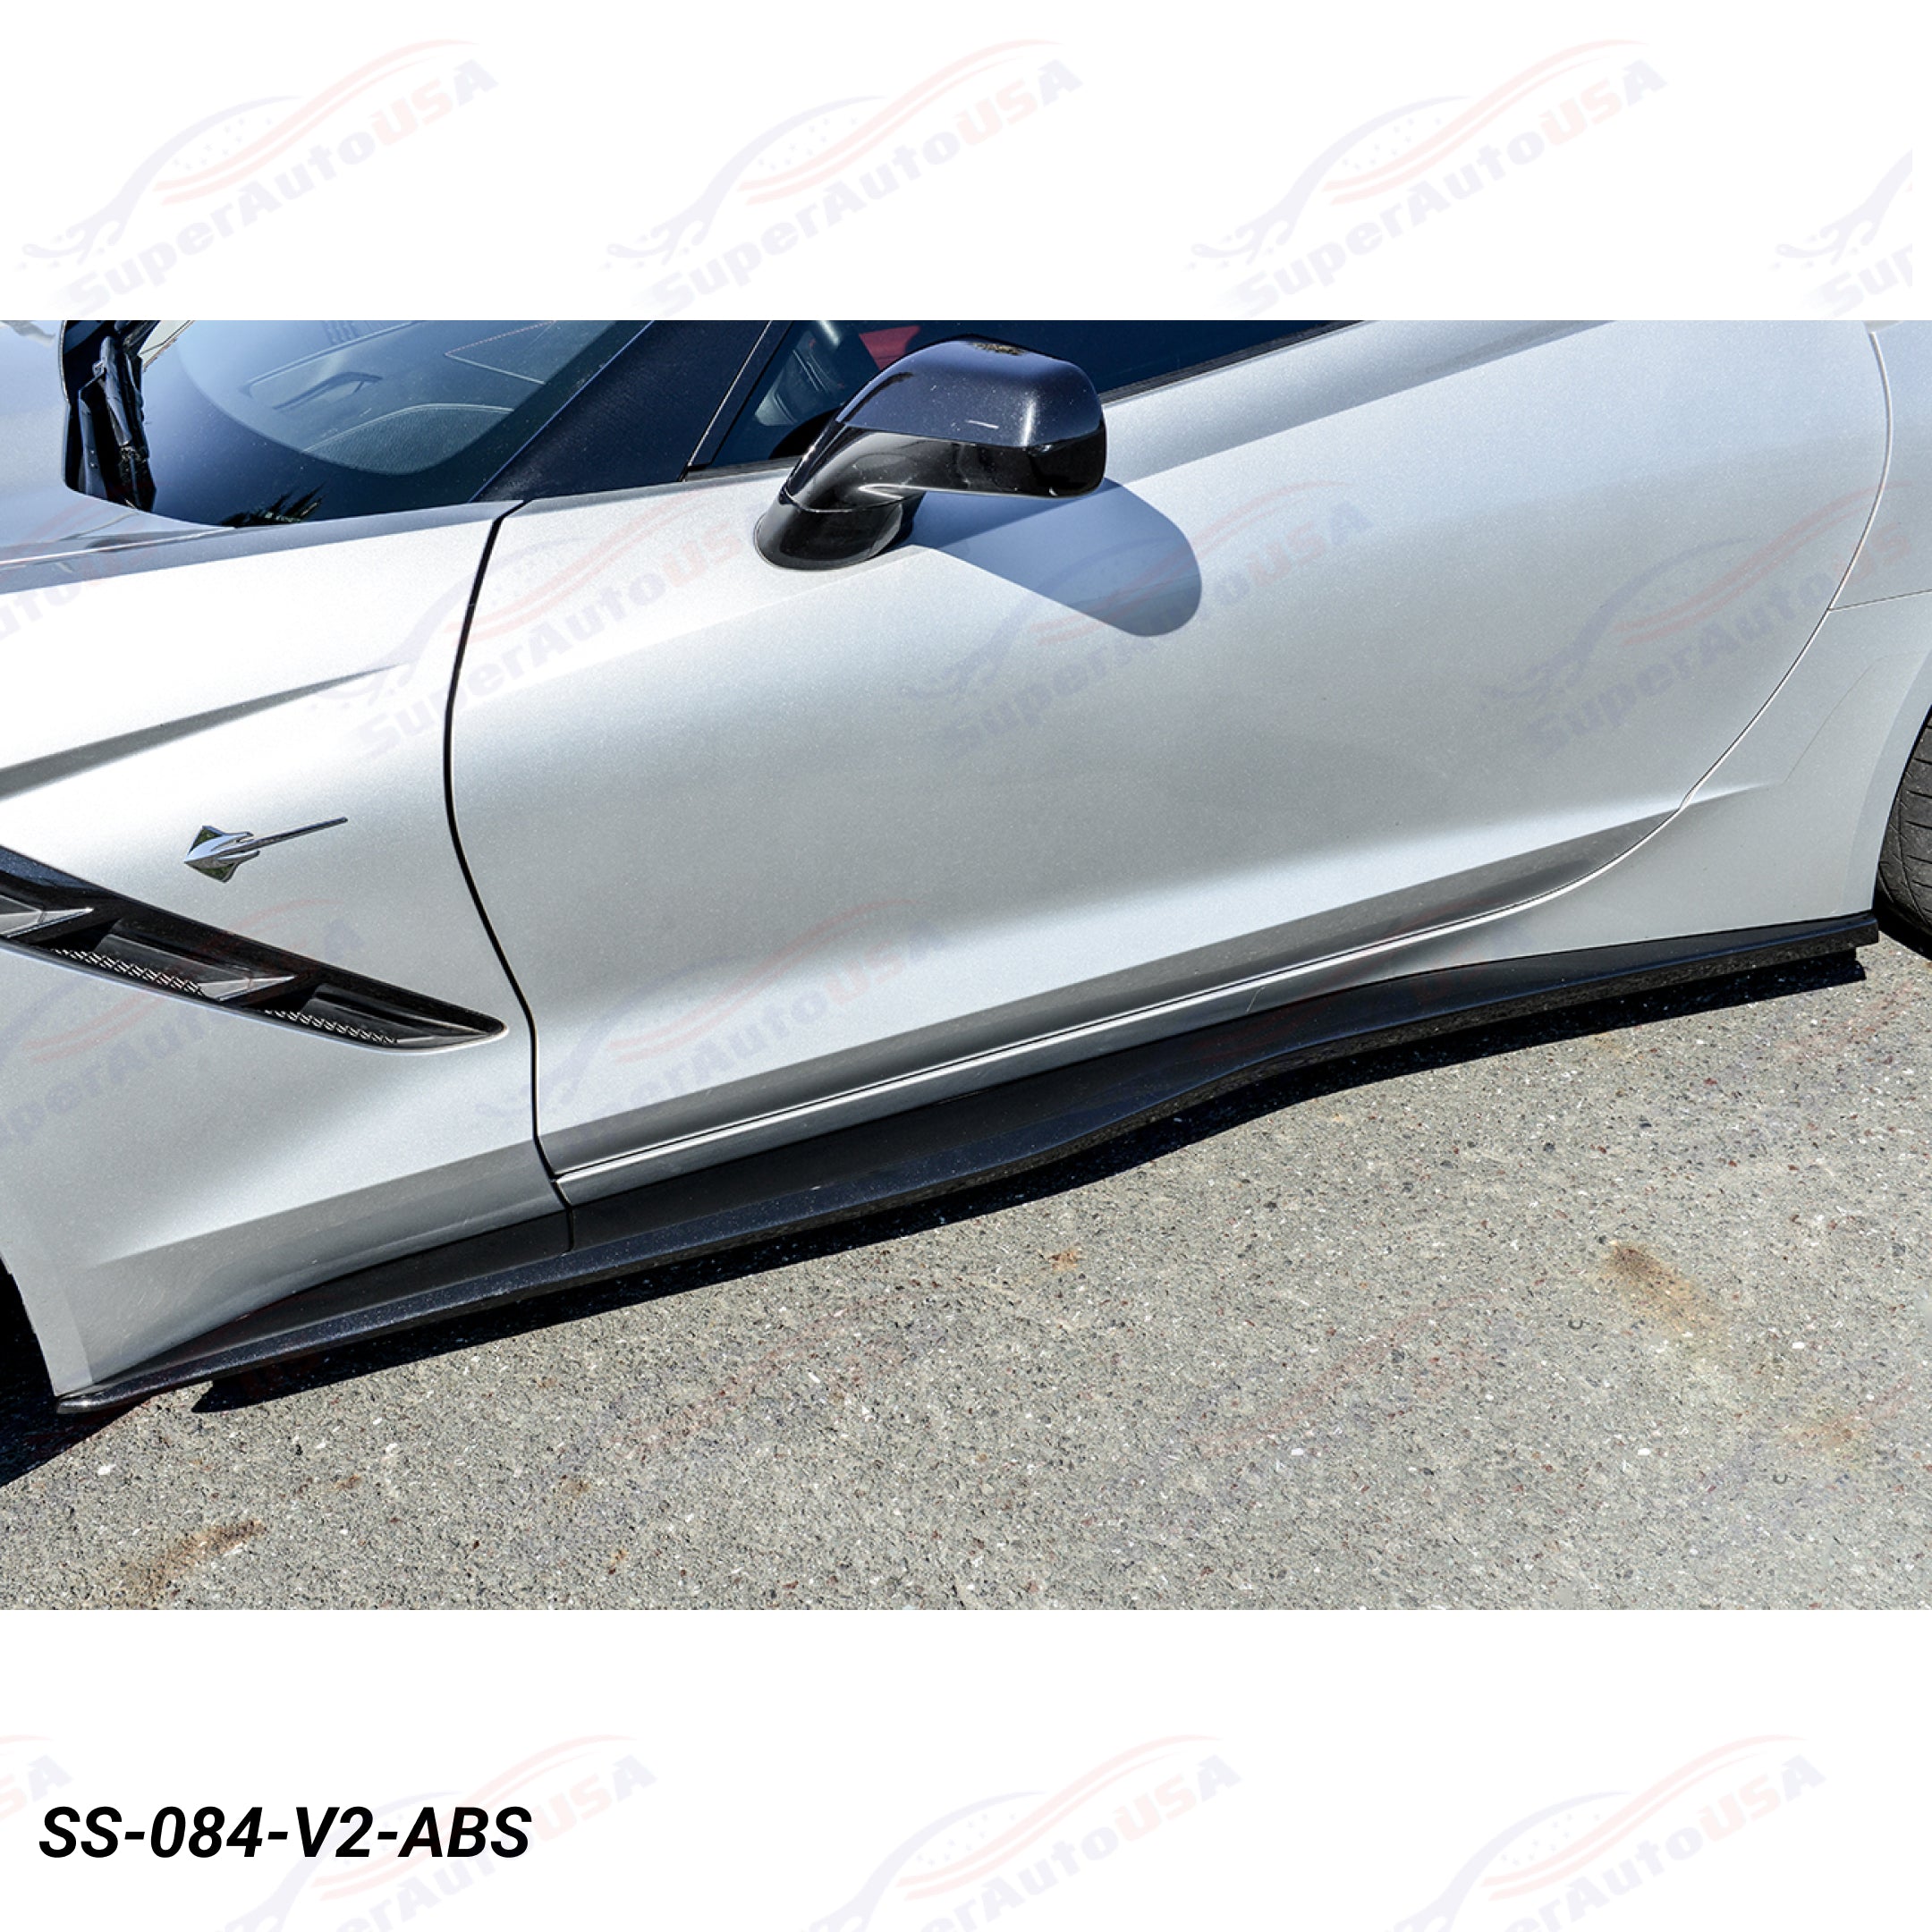 Body Kit Set - Stage 3.5 ZR1 Style | Fits Corvette Corvette C7 (14-19)